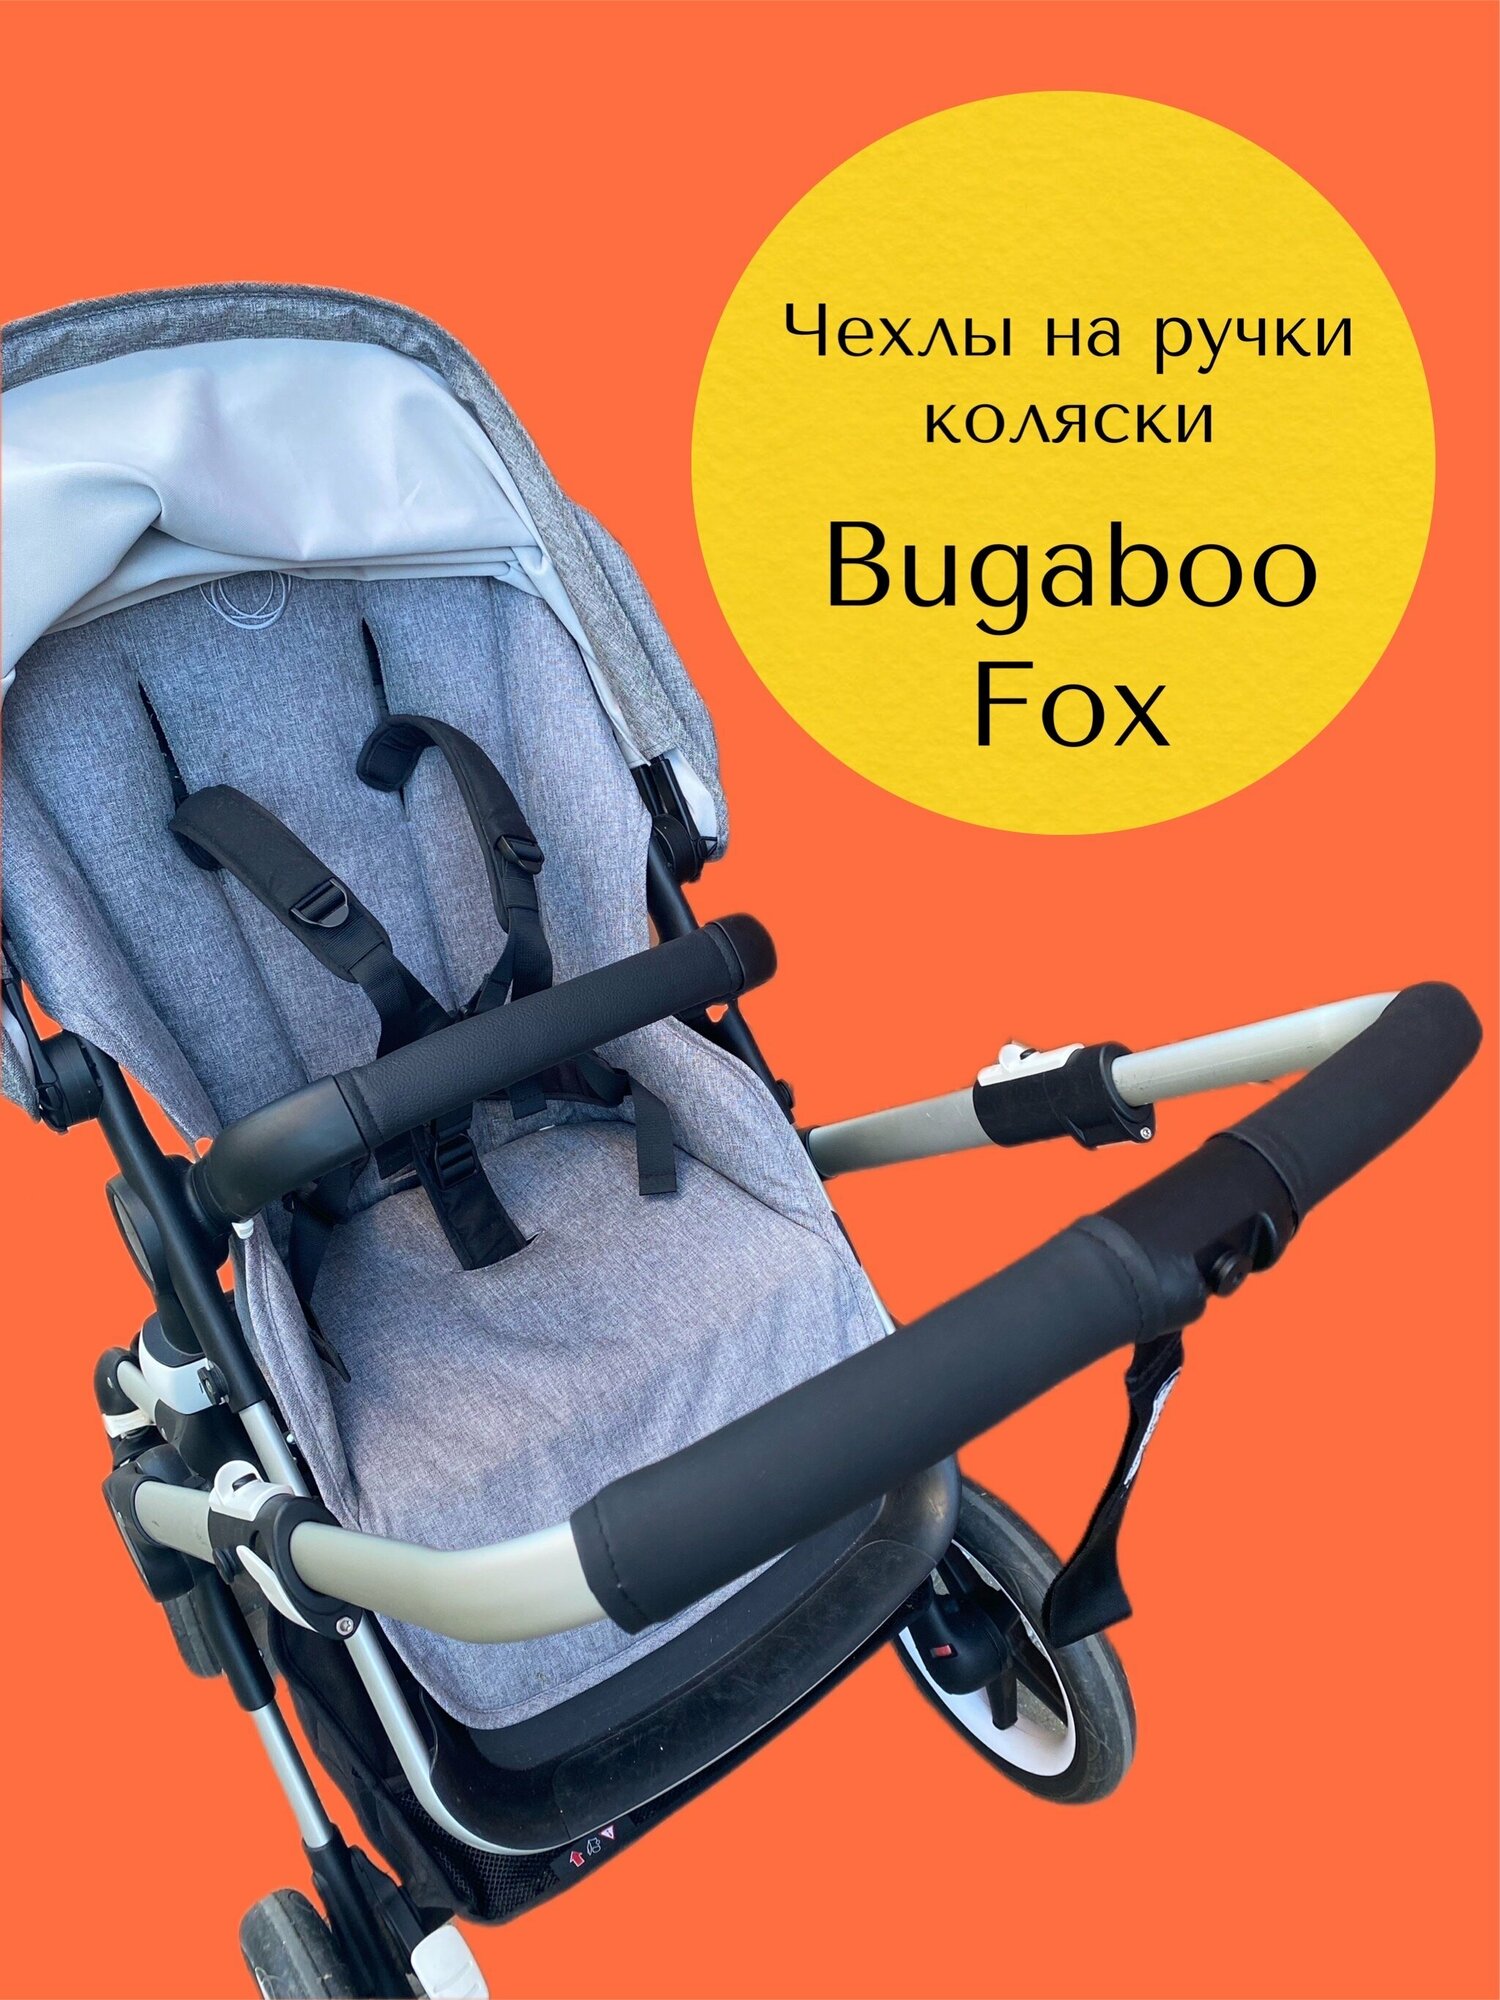    Bugaboo Fox